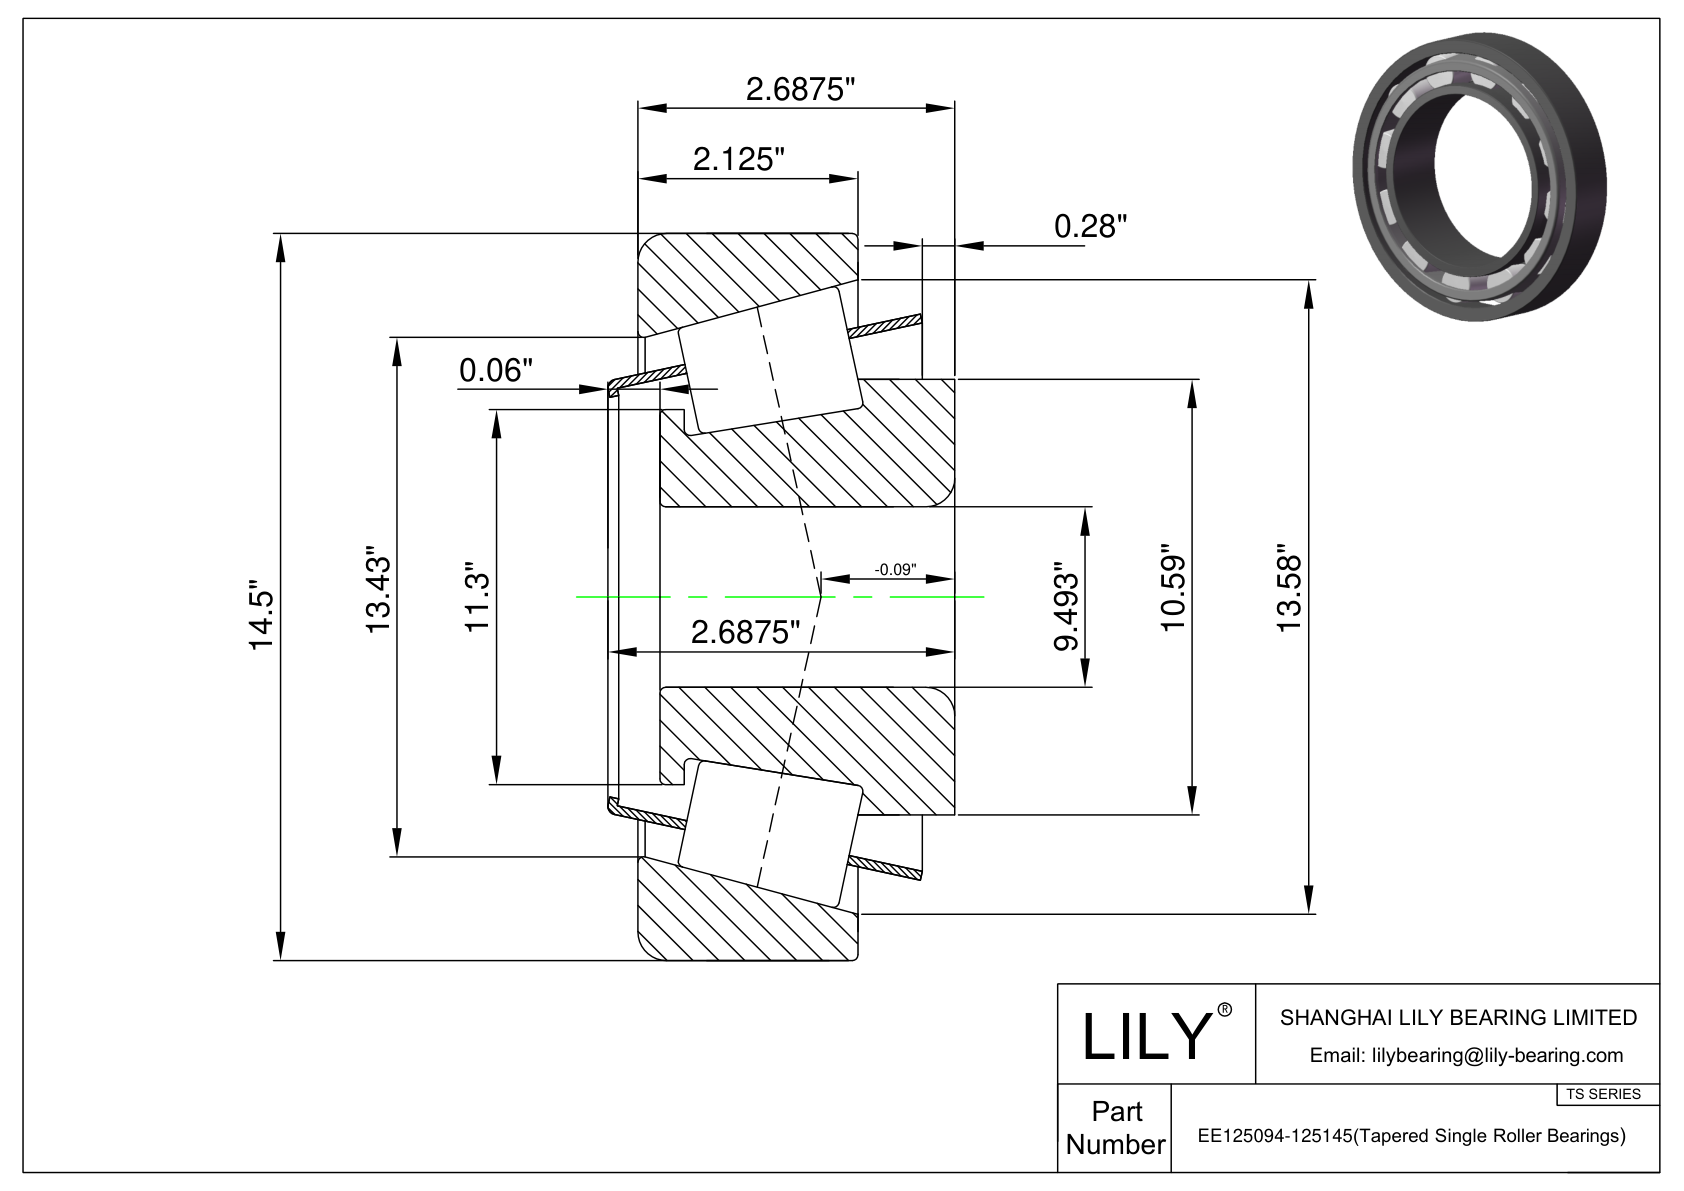 EE125094-125145 TS系列(圆锥单滚子轴承)(英制) CAD图形